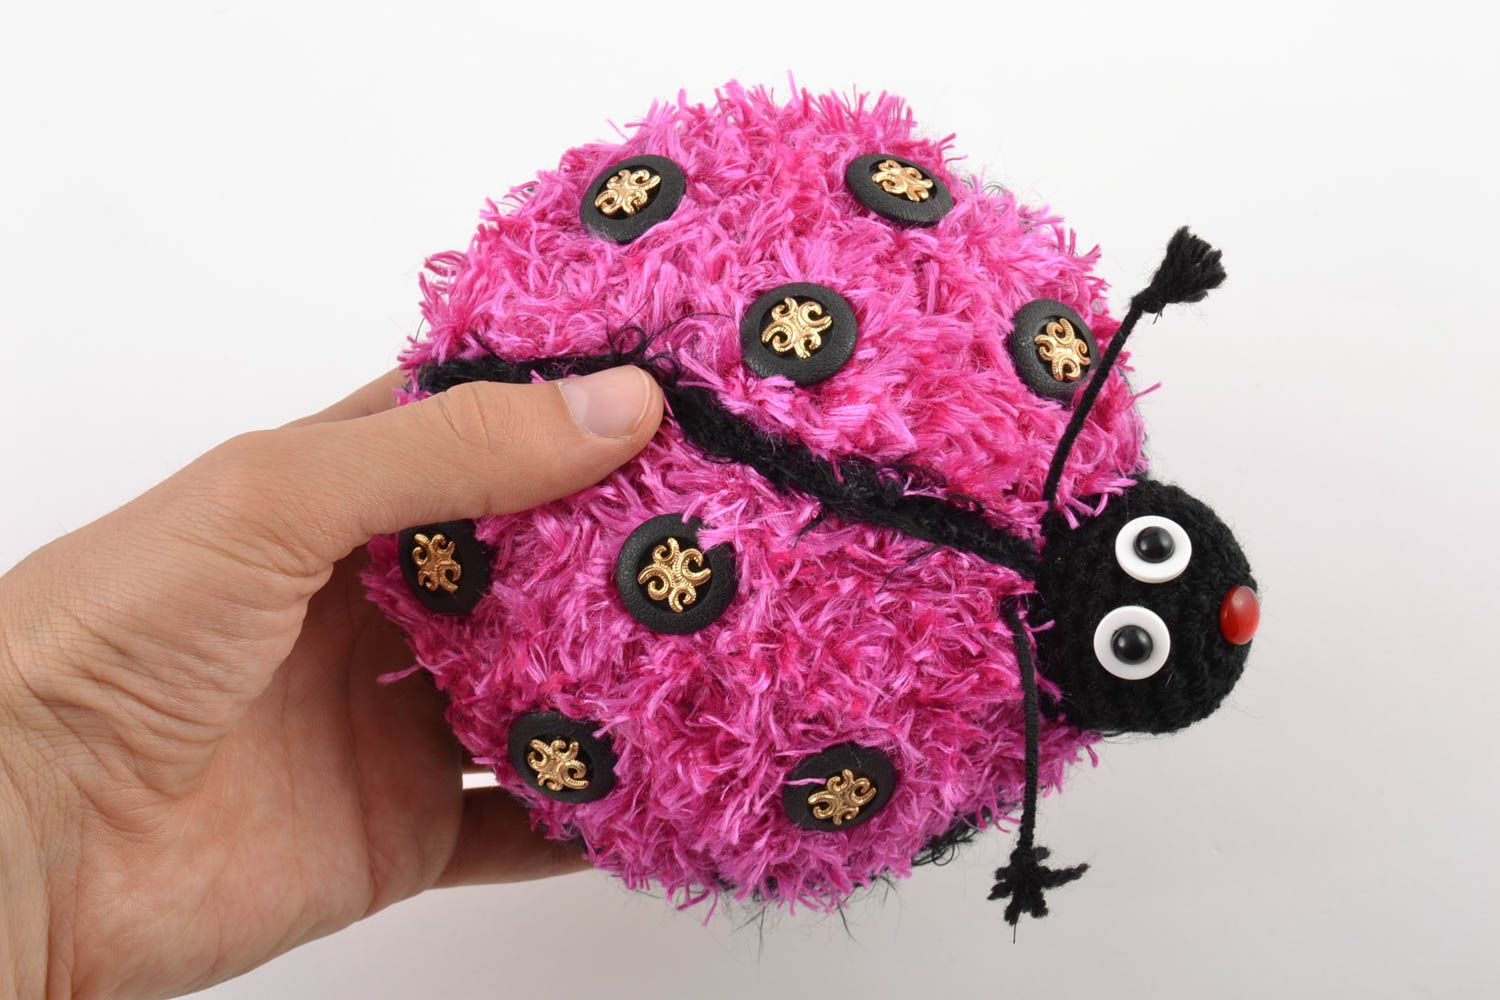 Handmade pink crochet soft toy created using amigurumi technique in the shape of ladybug photo 2